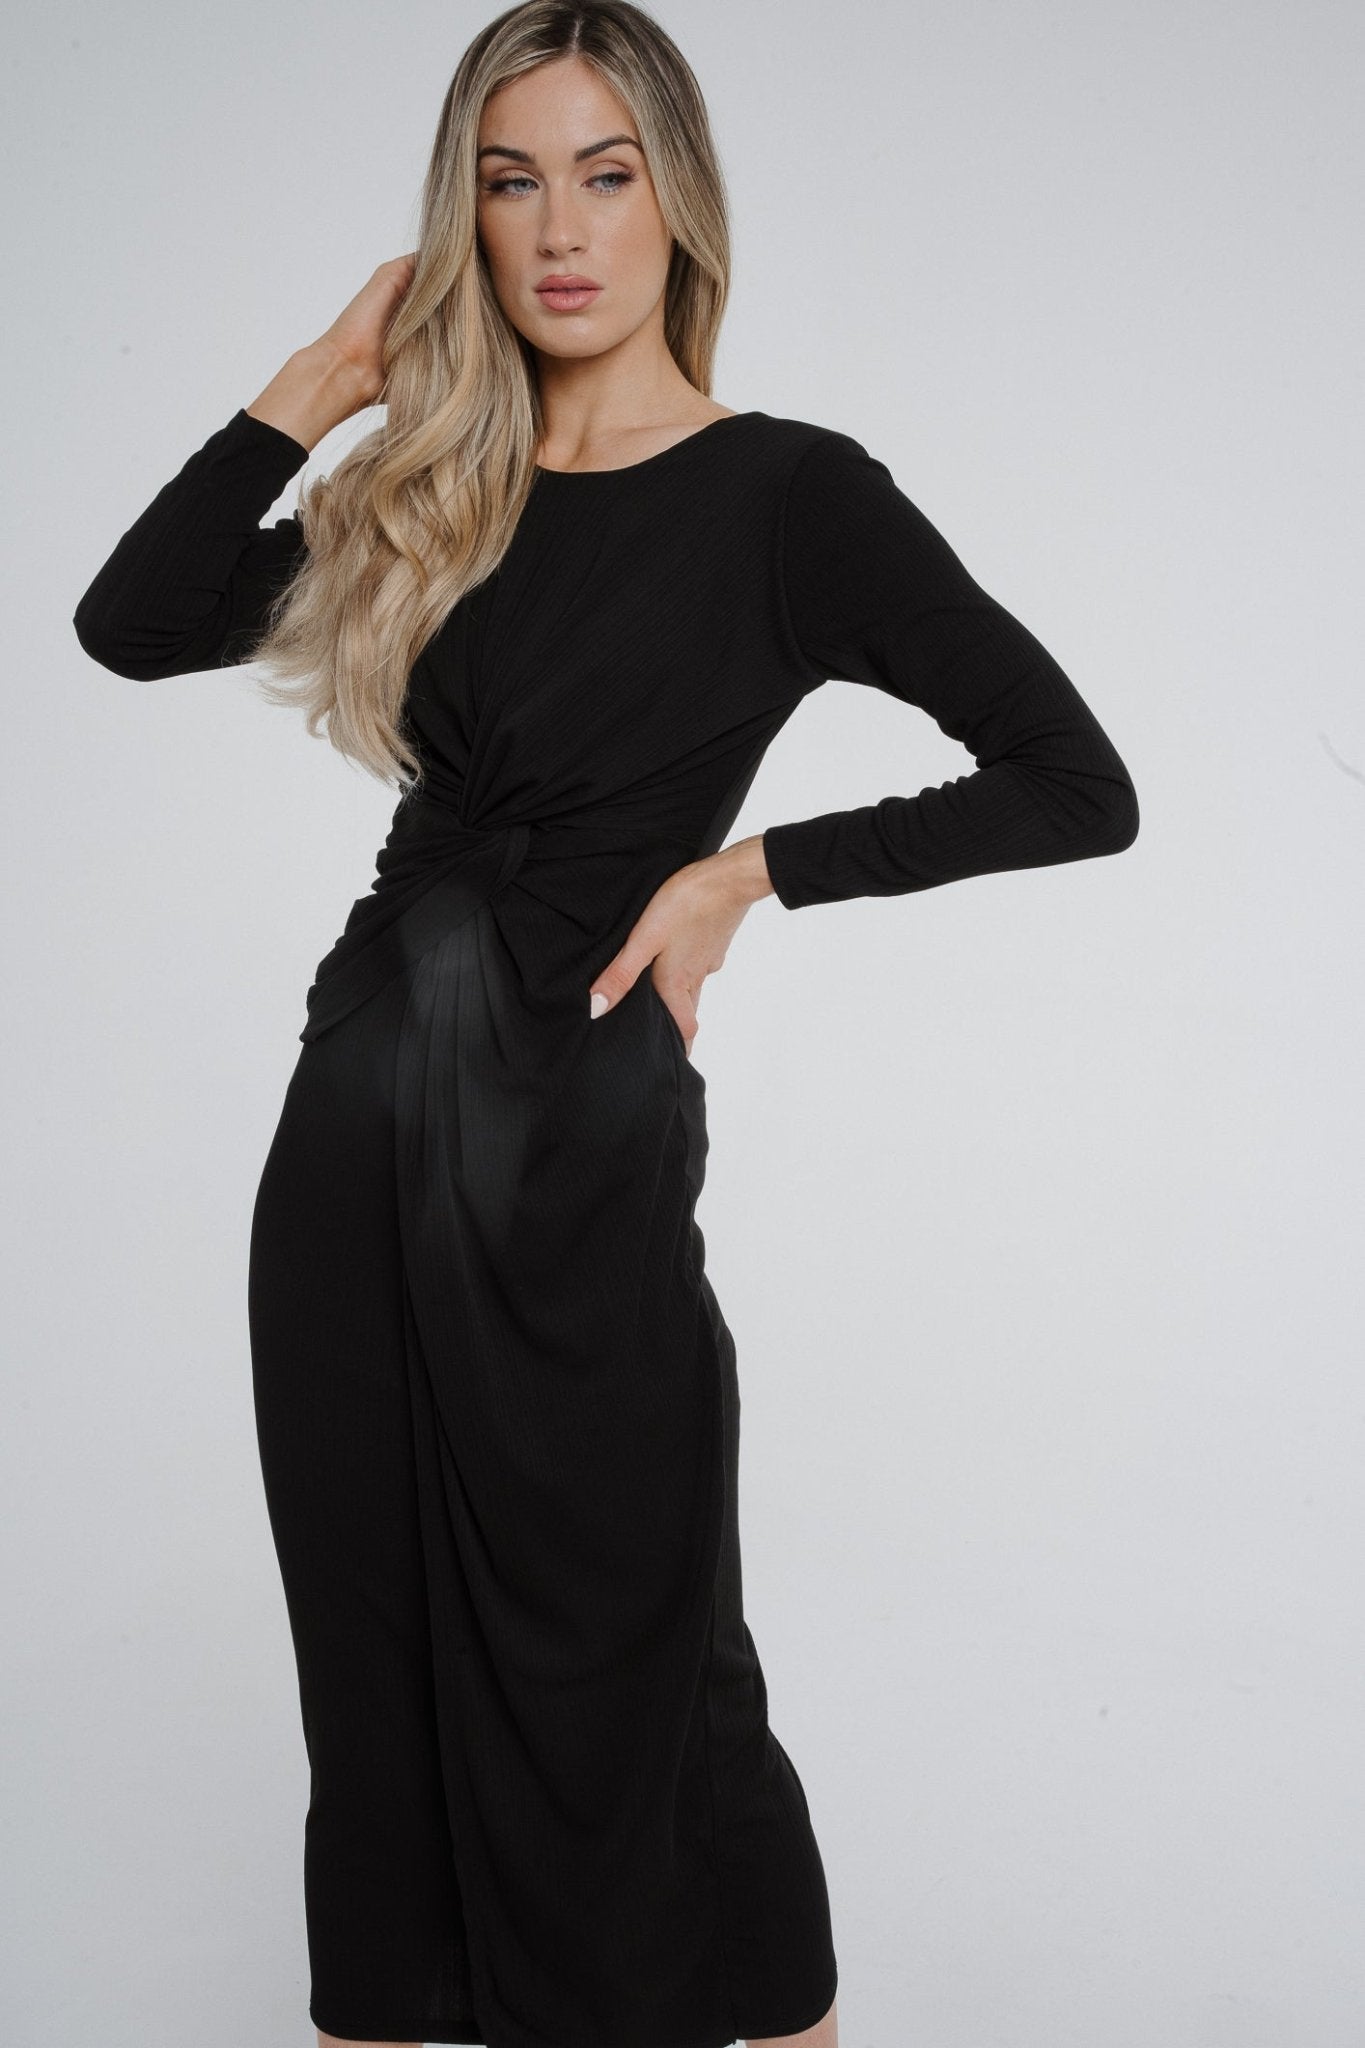 Kelly Knot Front Midi Dress In Black - The Walk in Wardrobe